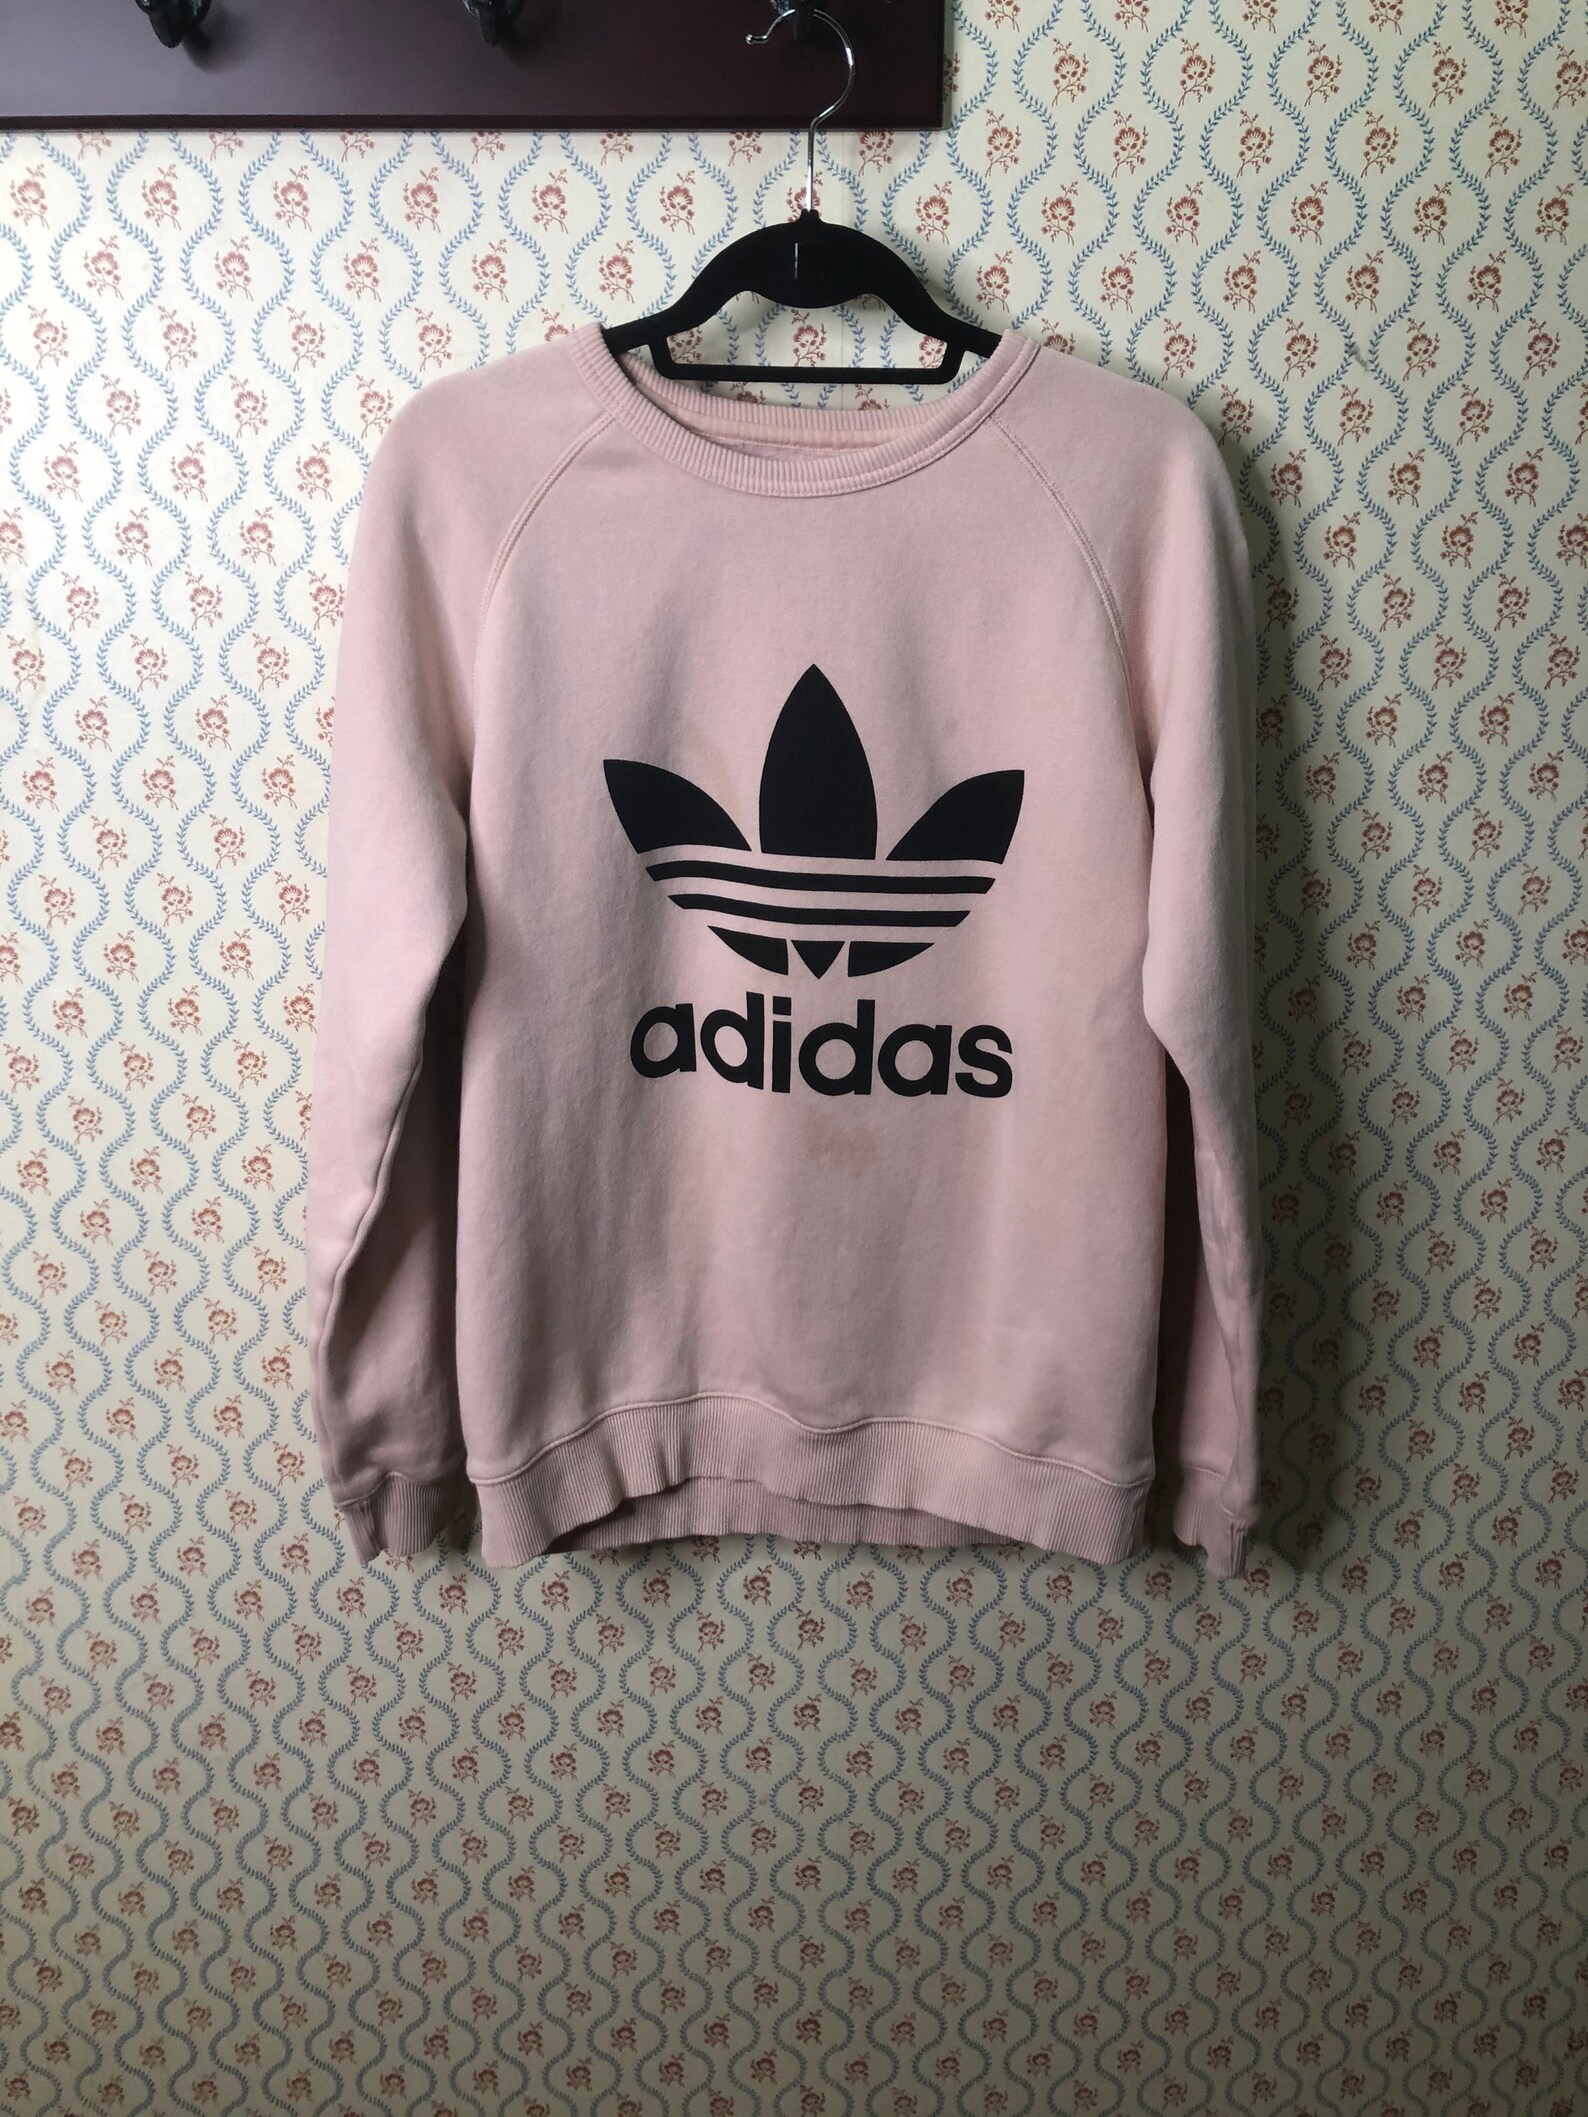 Adidas baby pink sweatshirt | Etsy